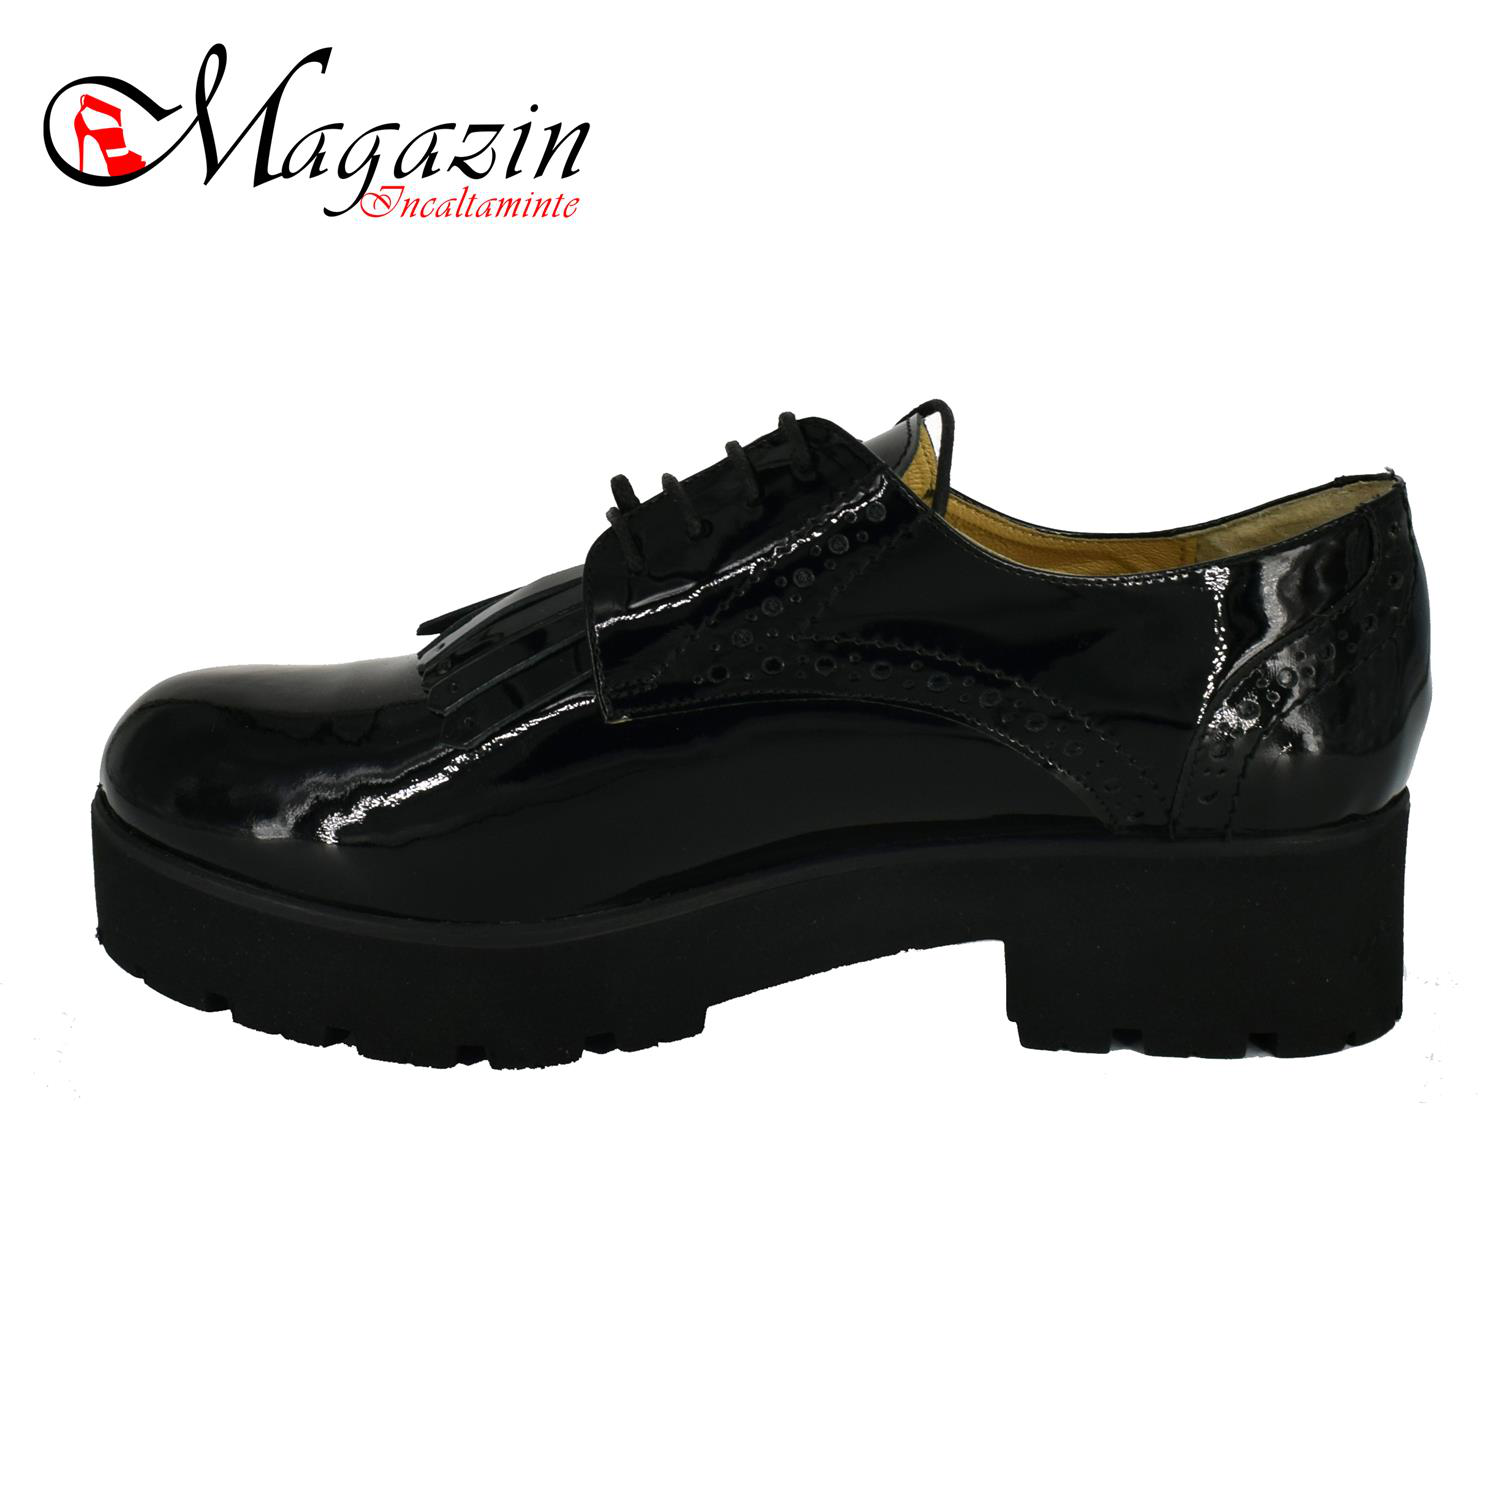 Pantofi Dama Piele Naturala - Prego - 13L Negru